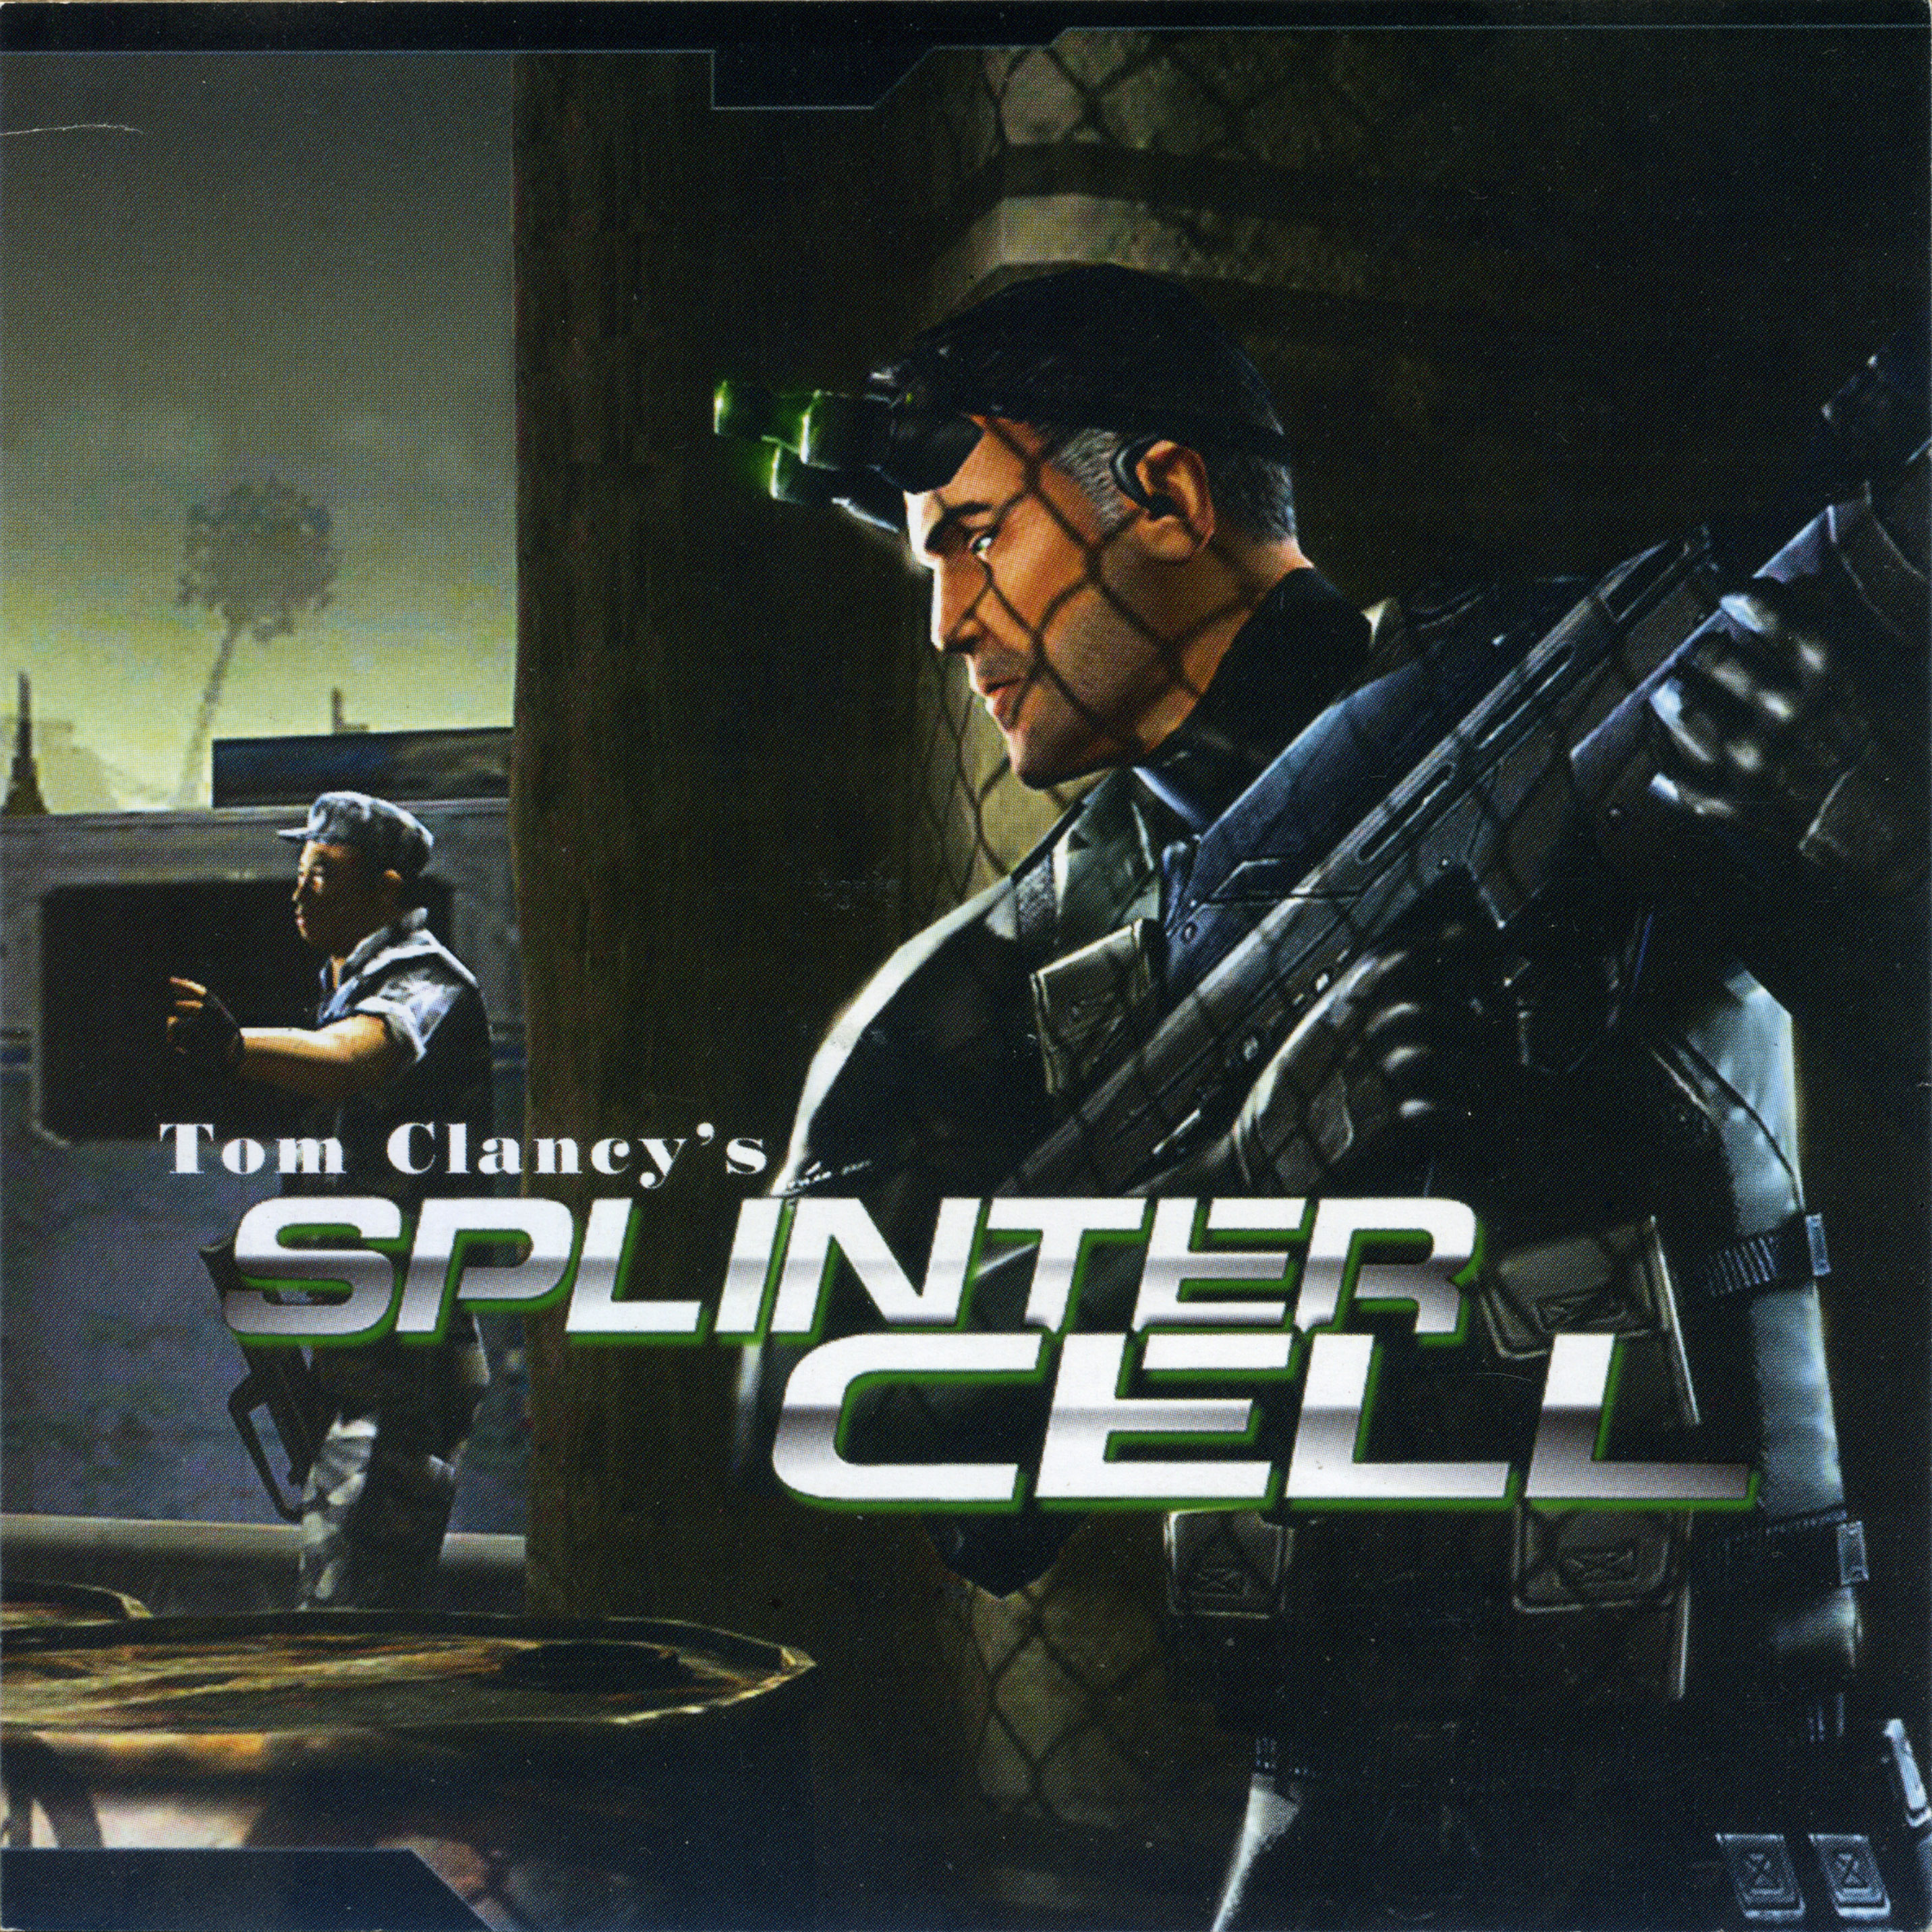 Сплинтер селл 1. Tom Clancy’s Splinter Cell 2002. Tom Clancy s Splinter Cell 2003. Сплинтер селл 2002. Tom Clancy's Splinter Cell 1 обложка.